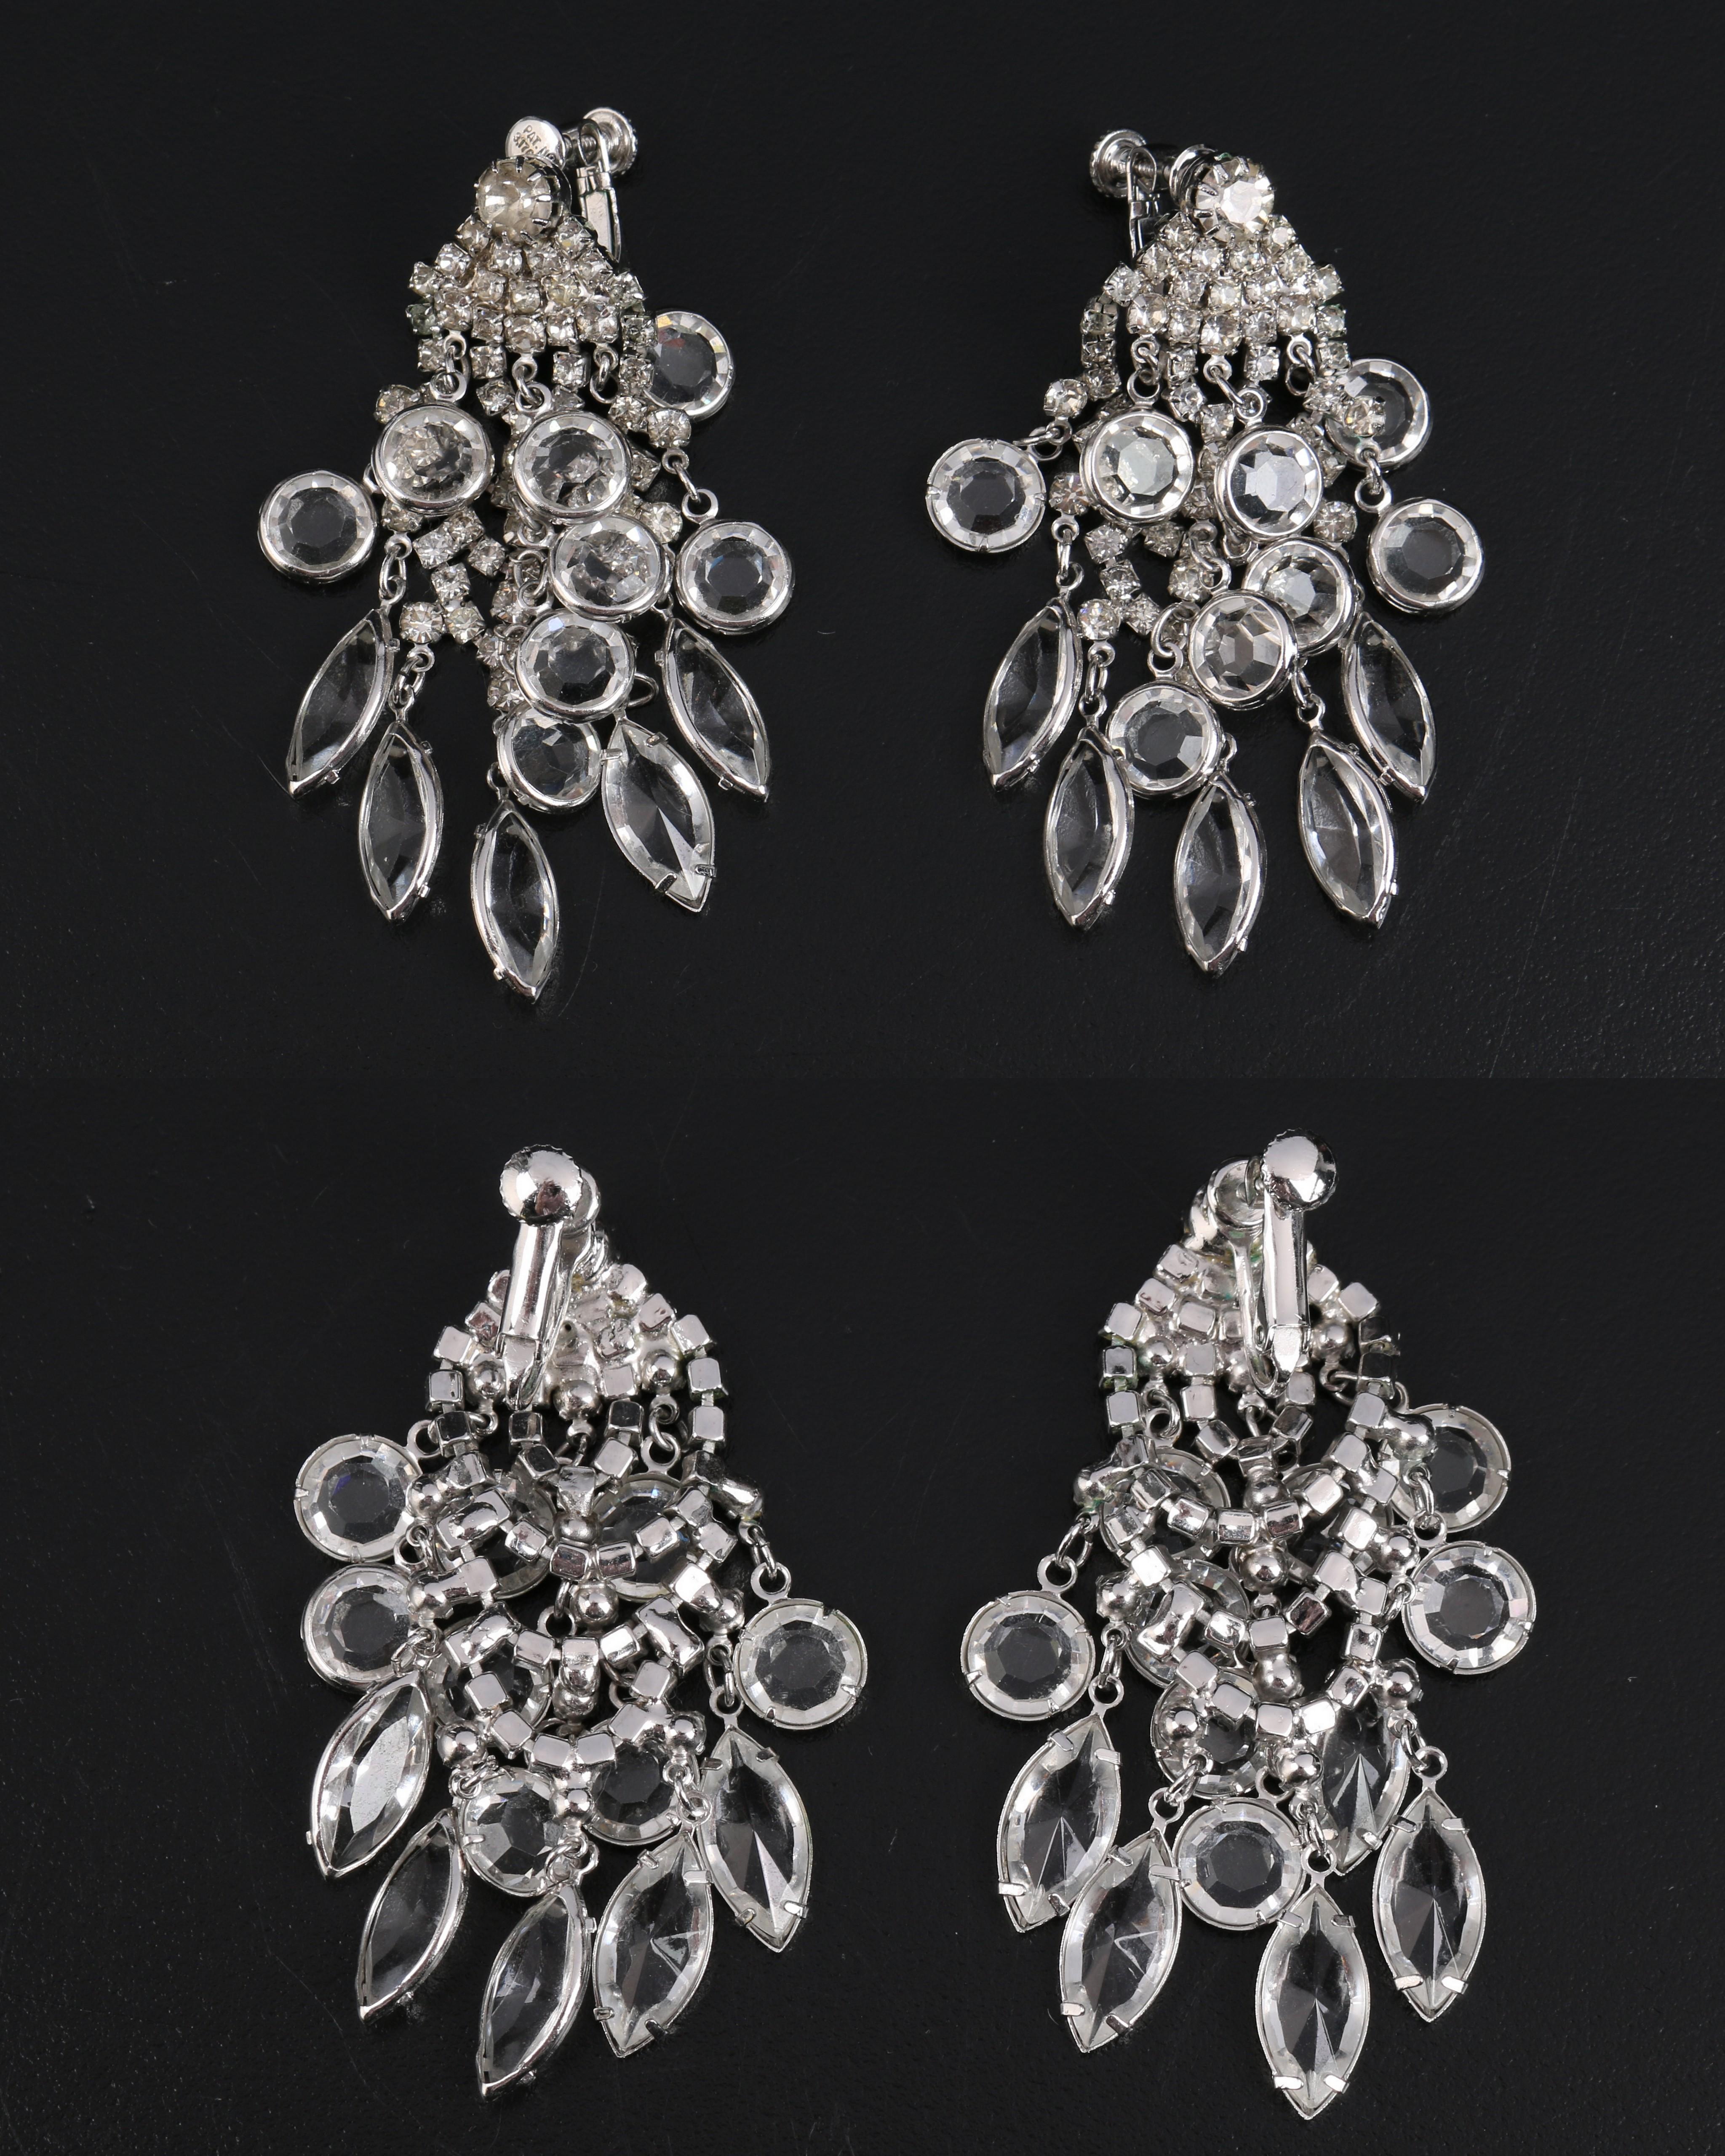 alfredulla necklace & earrings set